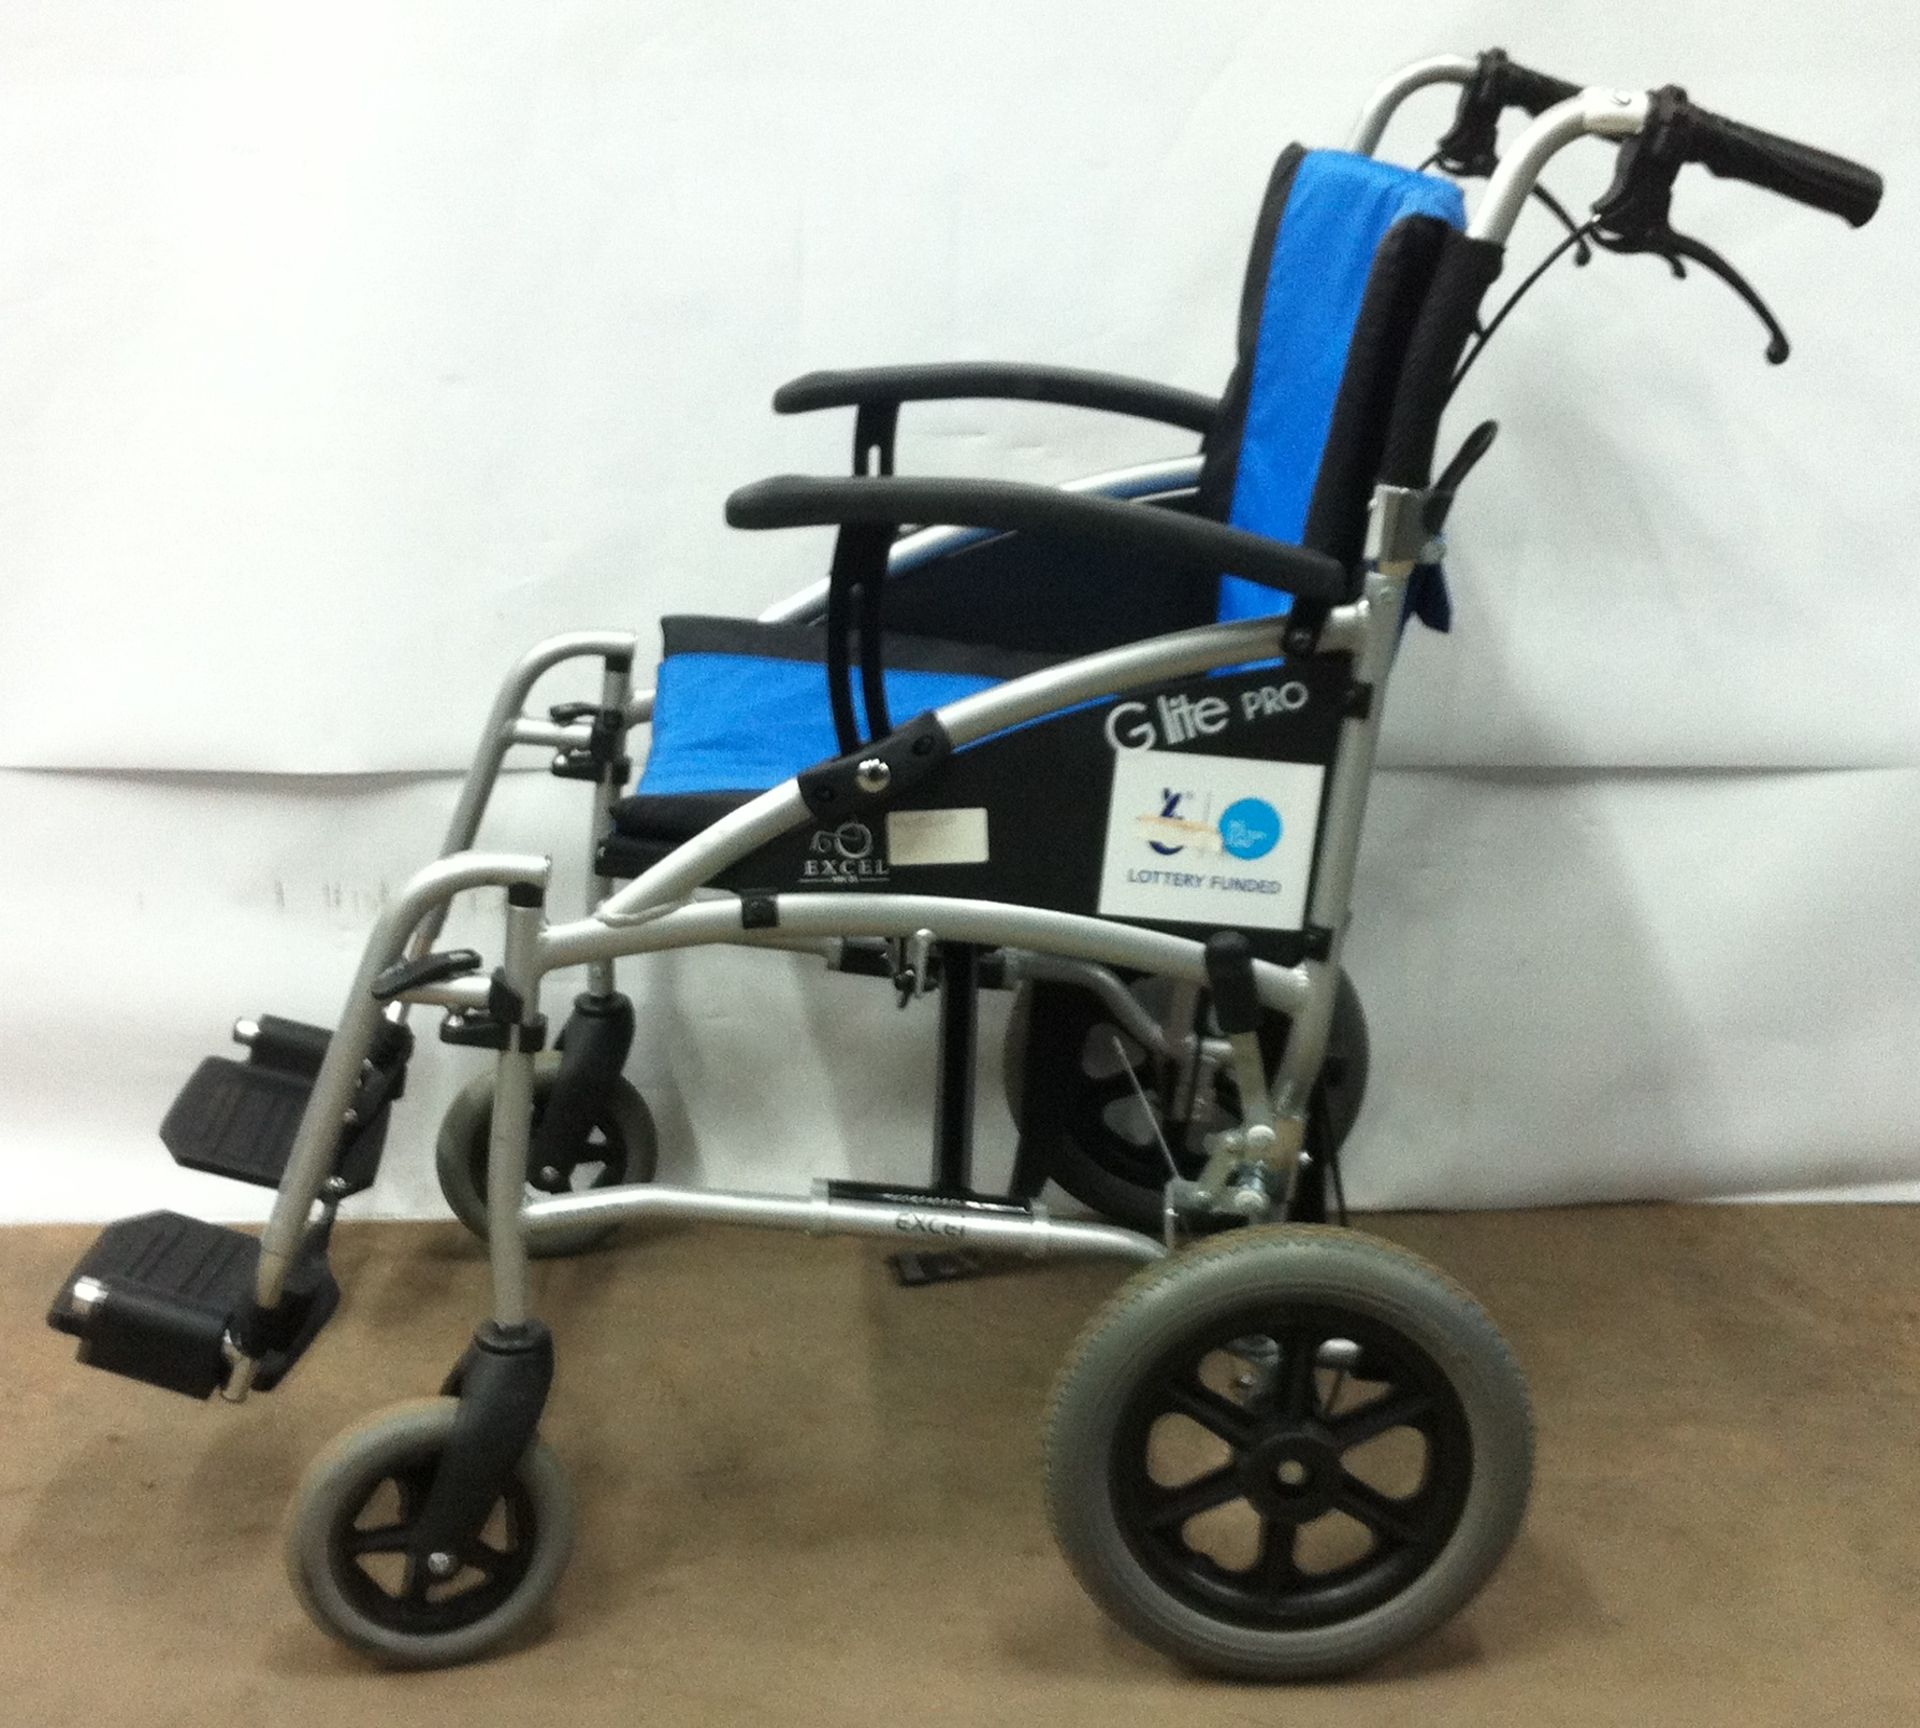 G-Lite Pro Wheelchair - Image 2 of 2